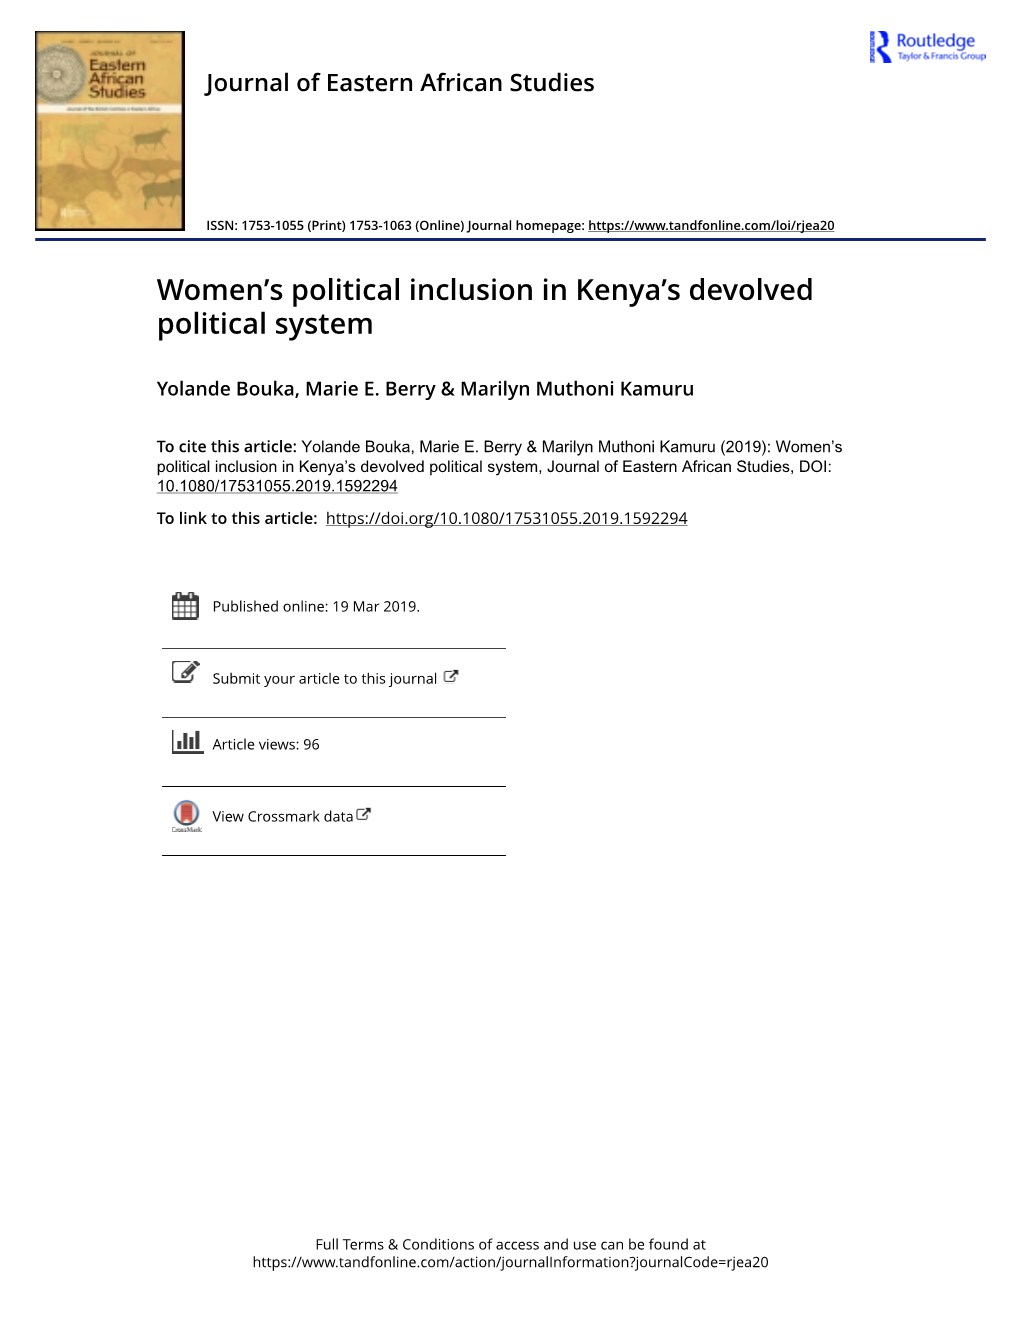 Women's Political Inclusion in Kenya's Devolved Political System